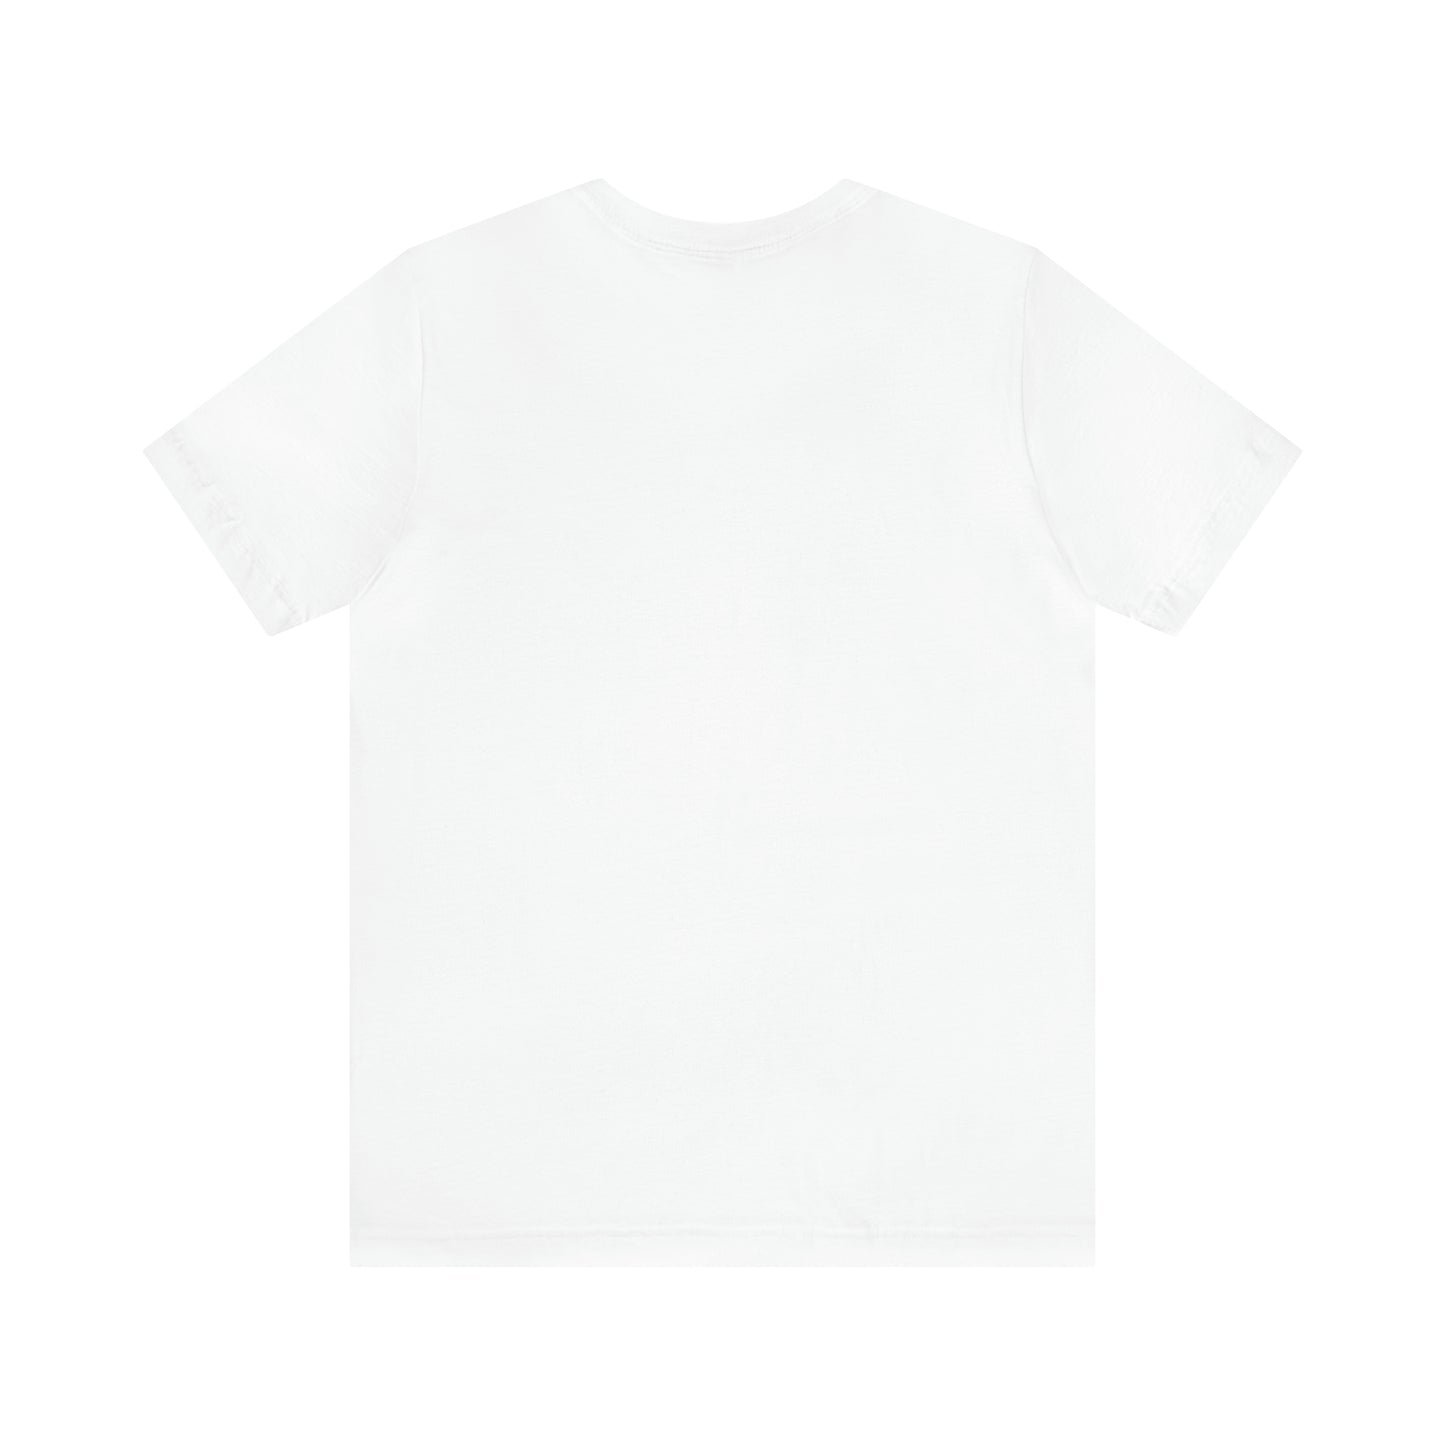 Easter Bunny Tee | Easter T-Shirt T-Shirt Petrova Designs